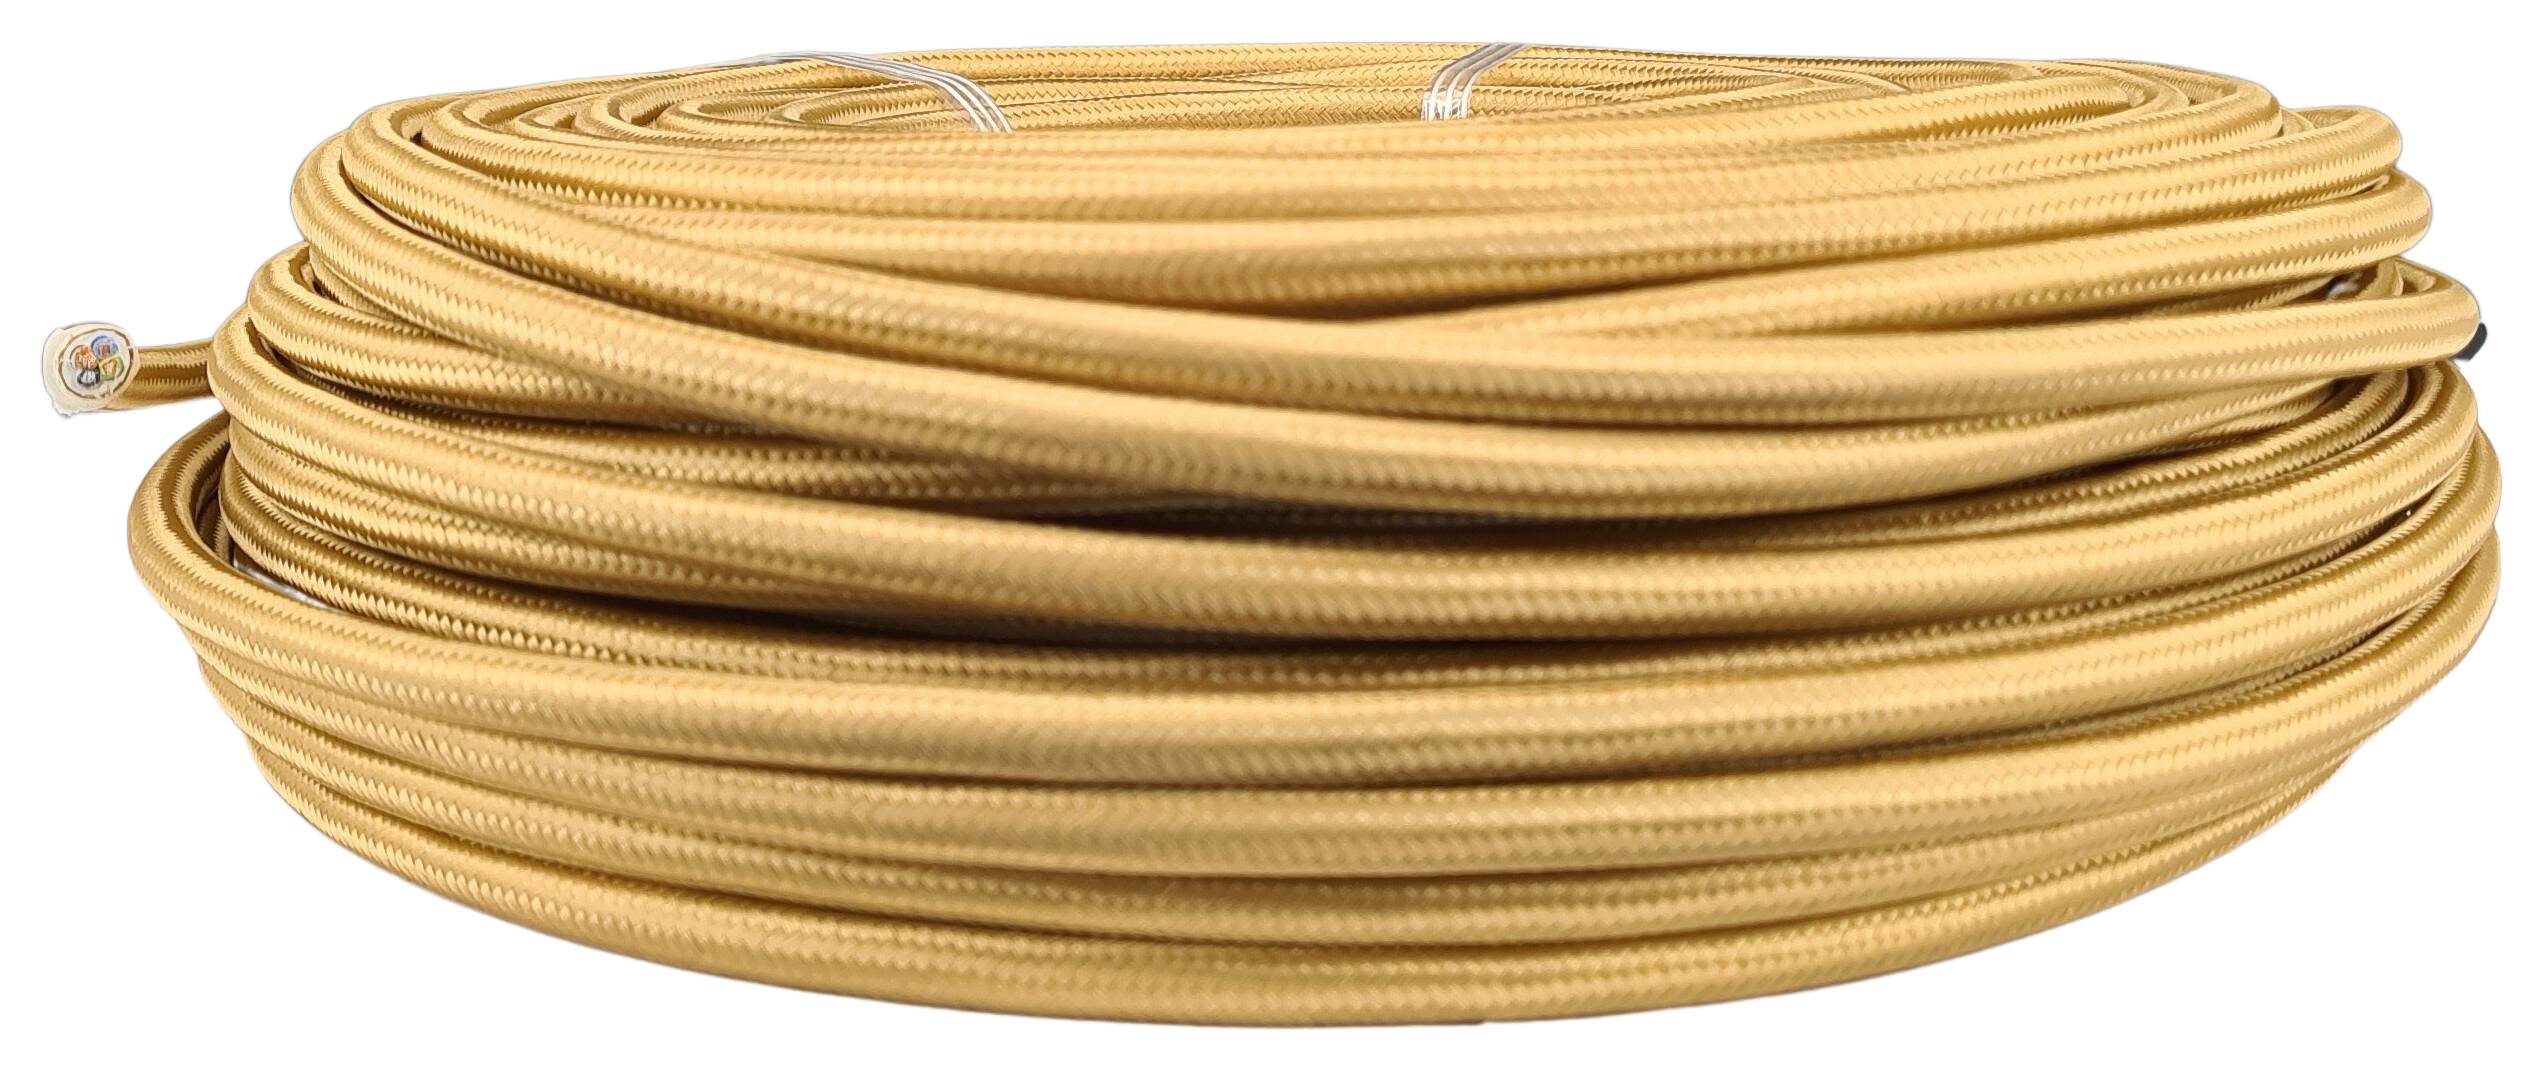 Kabel m. Stahlseil 3G 1,00 HO3VV-F AD = 6,4 mm PVC  textilummantelt RAL 1036 gold glänzend